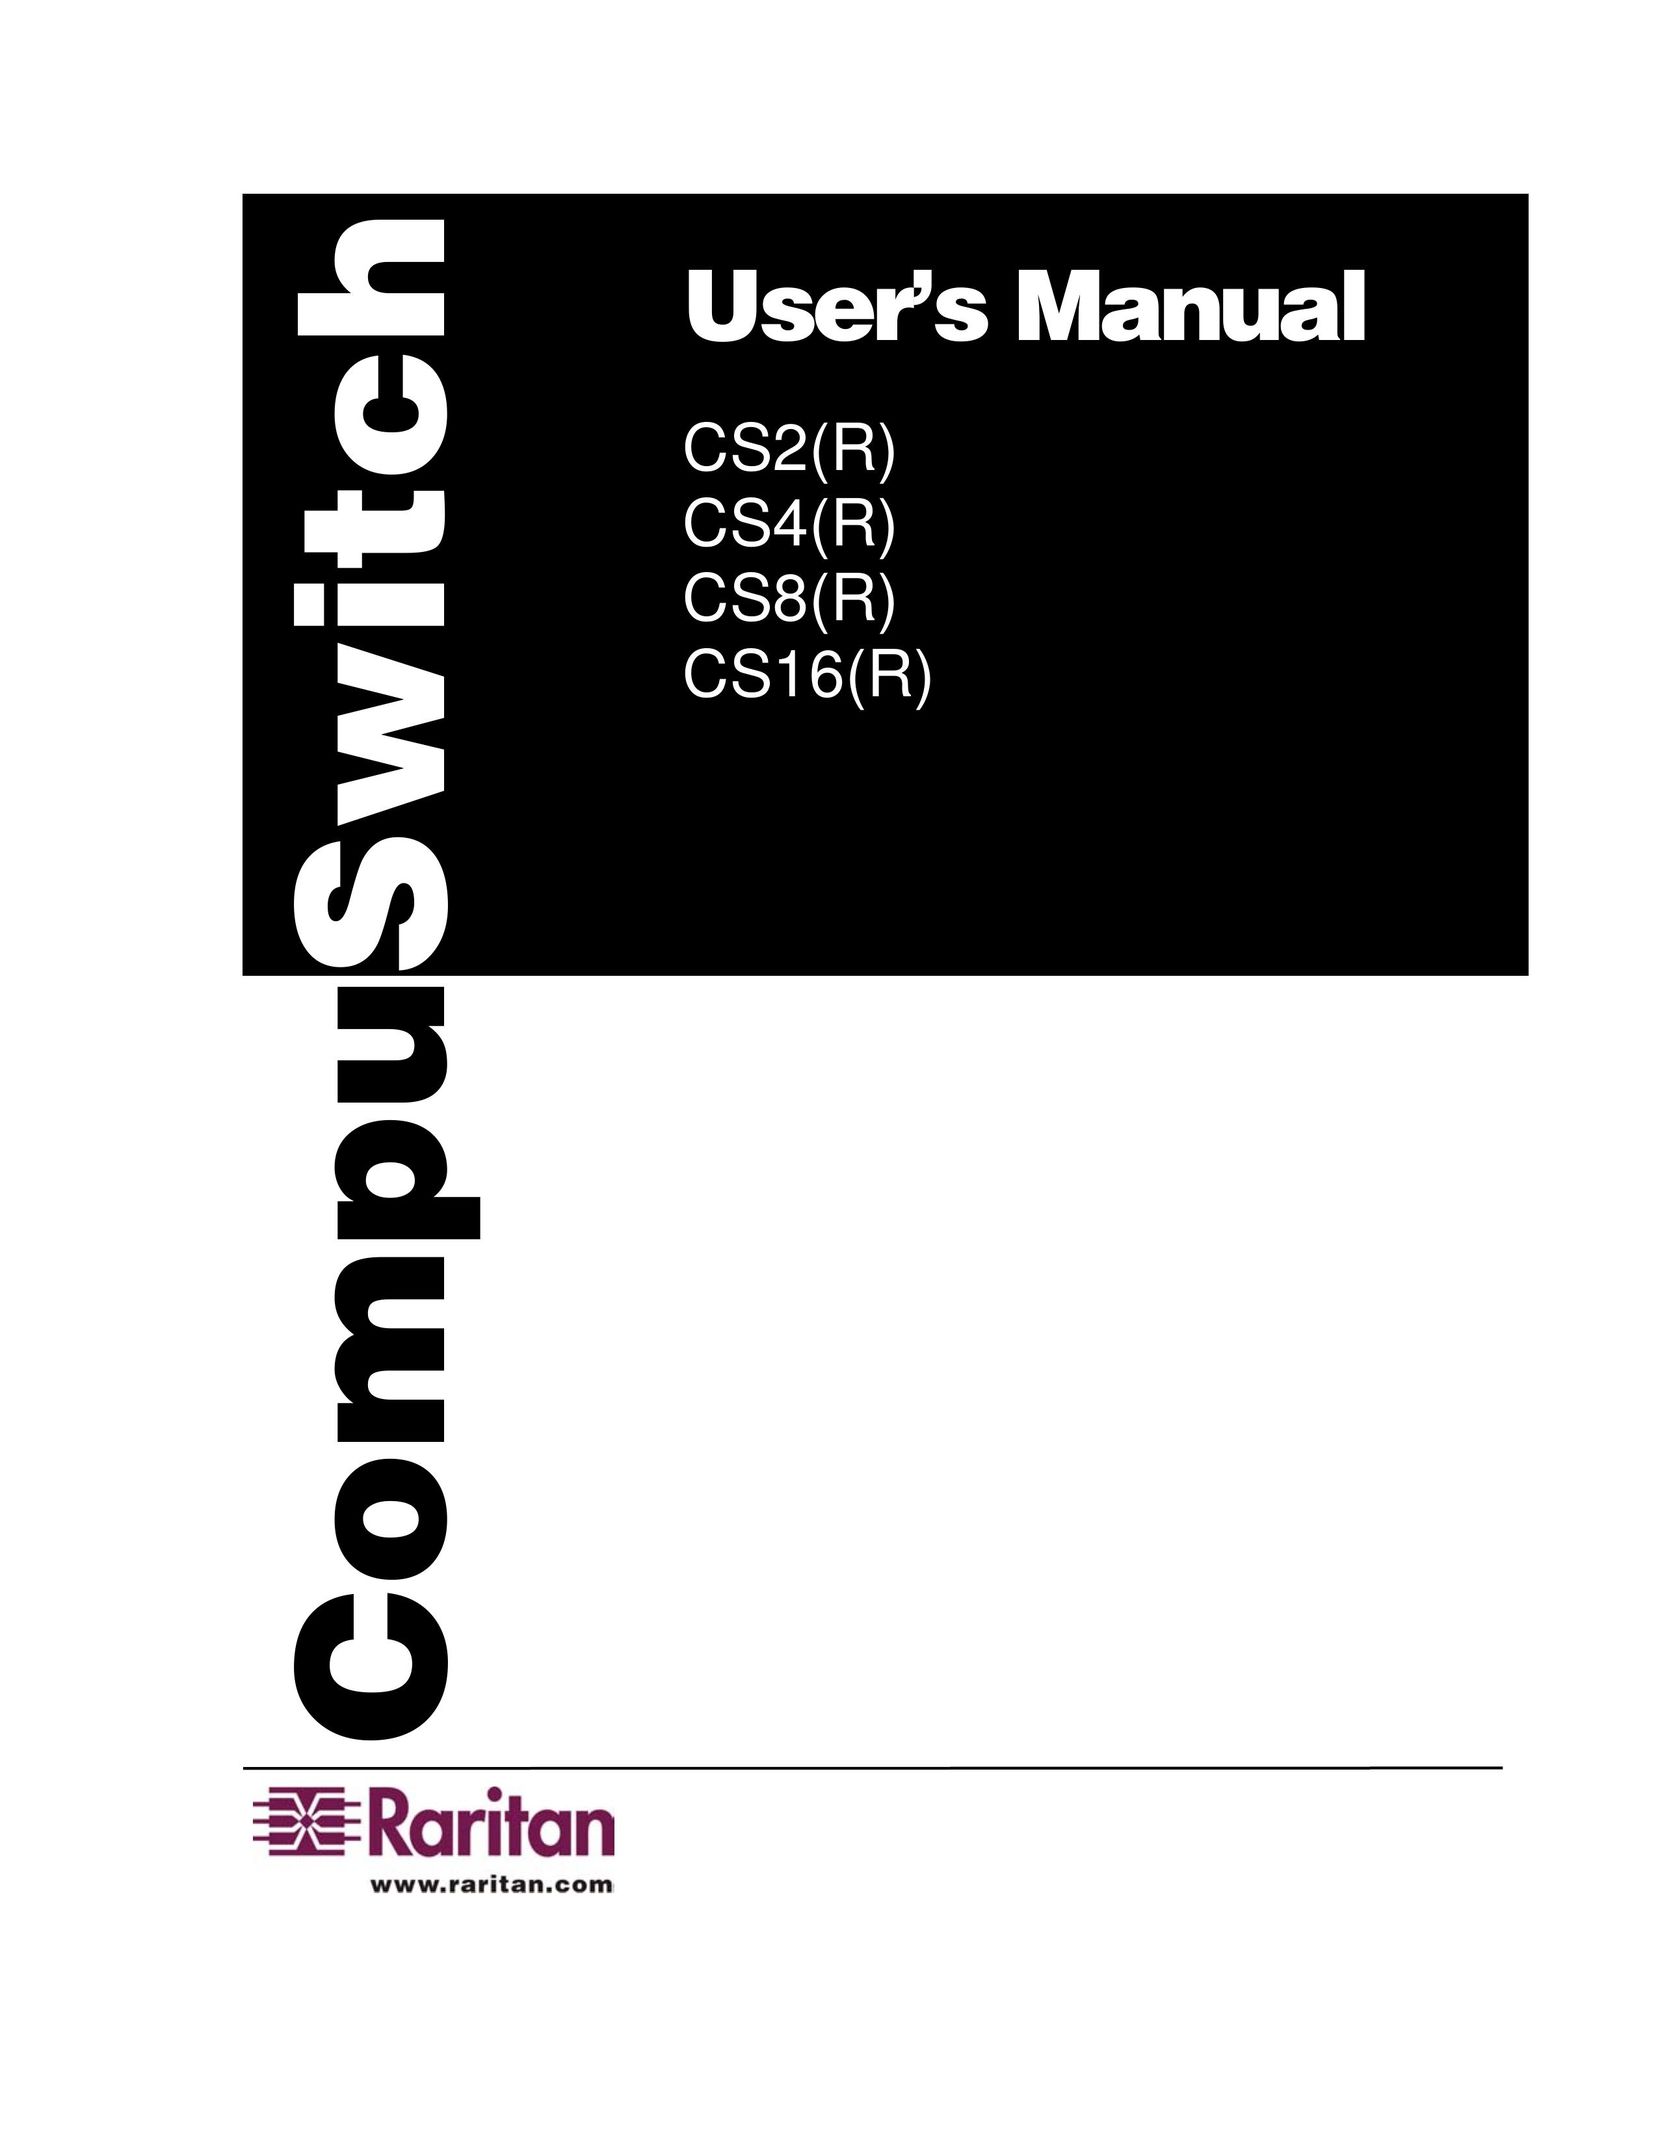 Raritan Engineering CS4(R) Switch User Manual